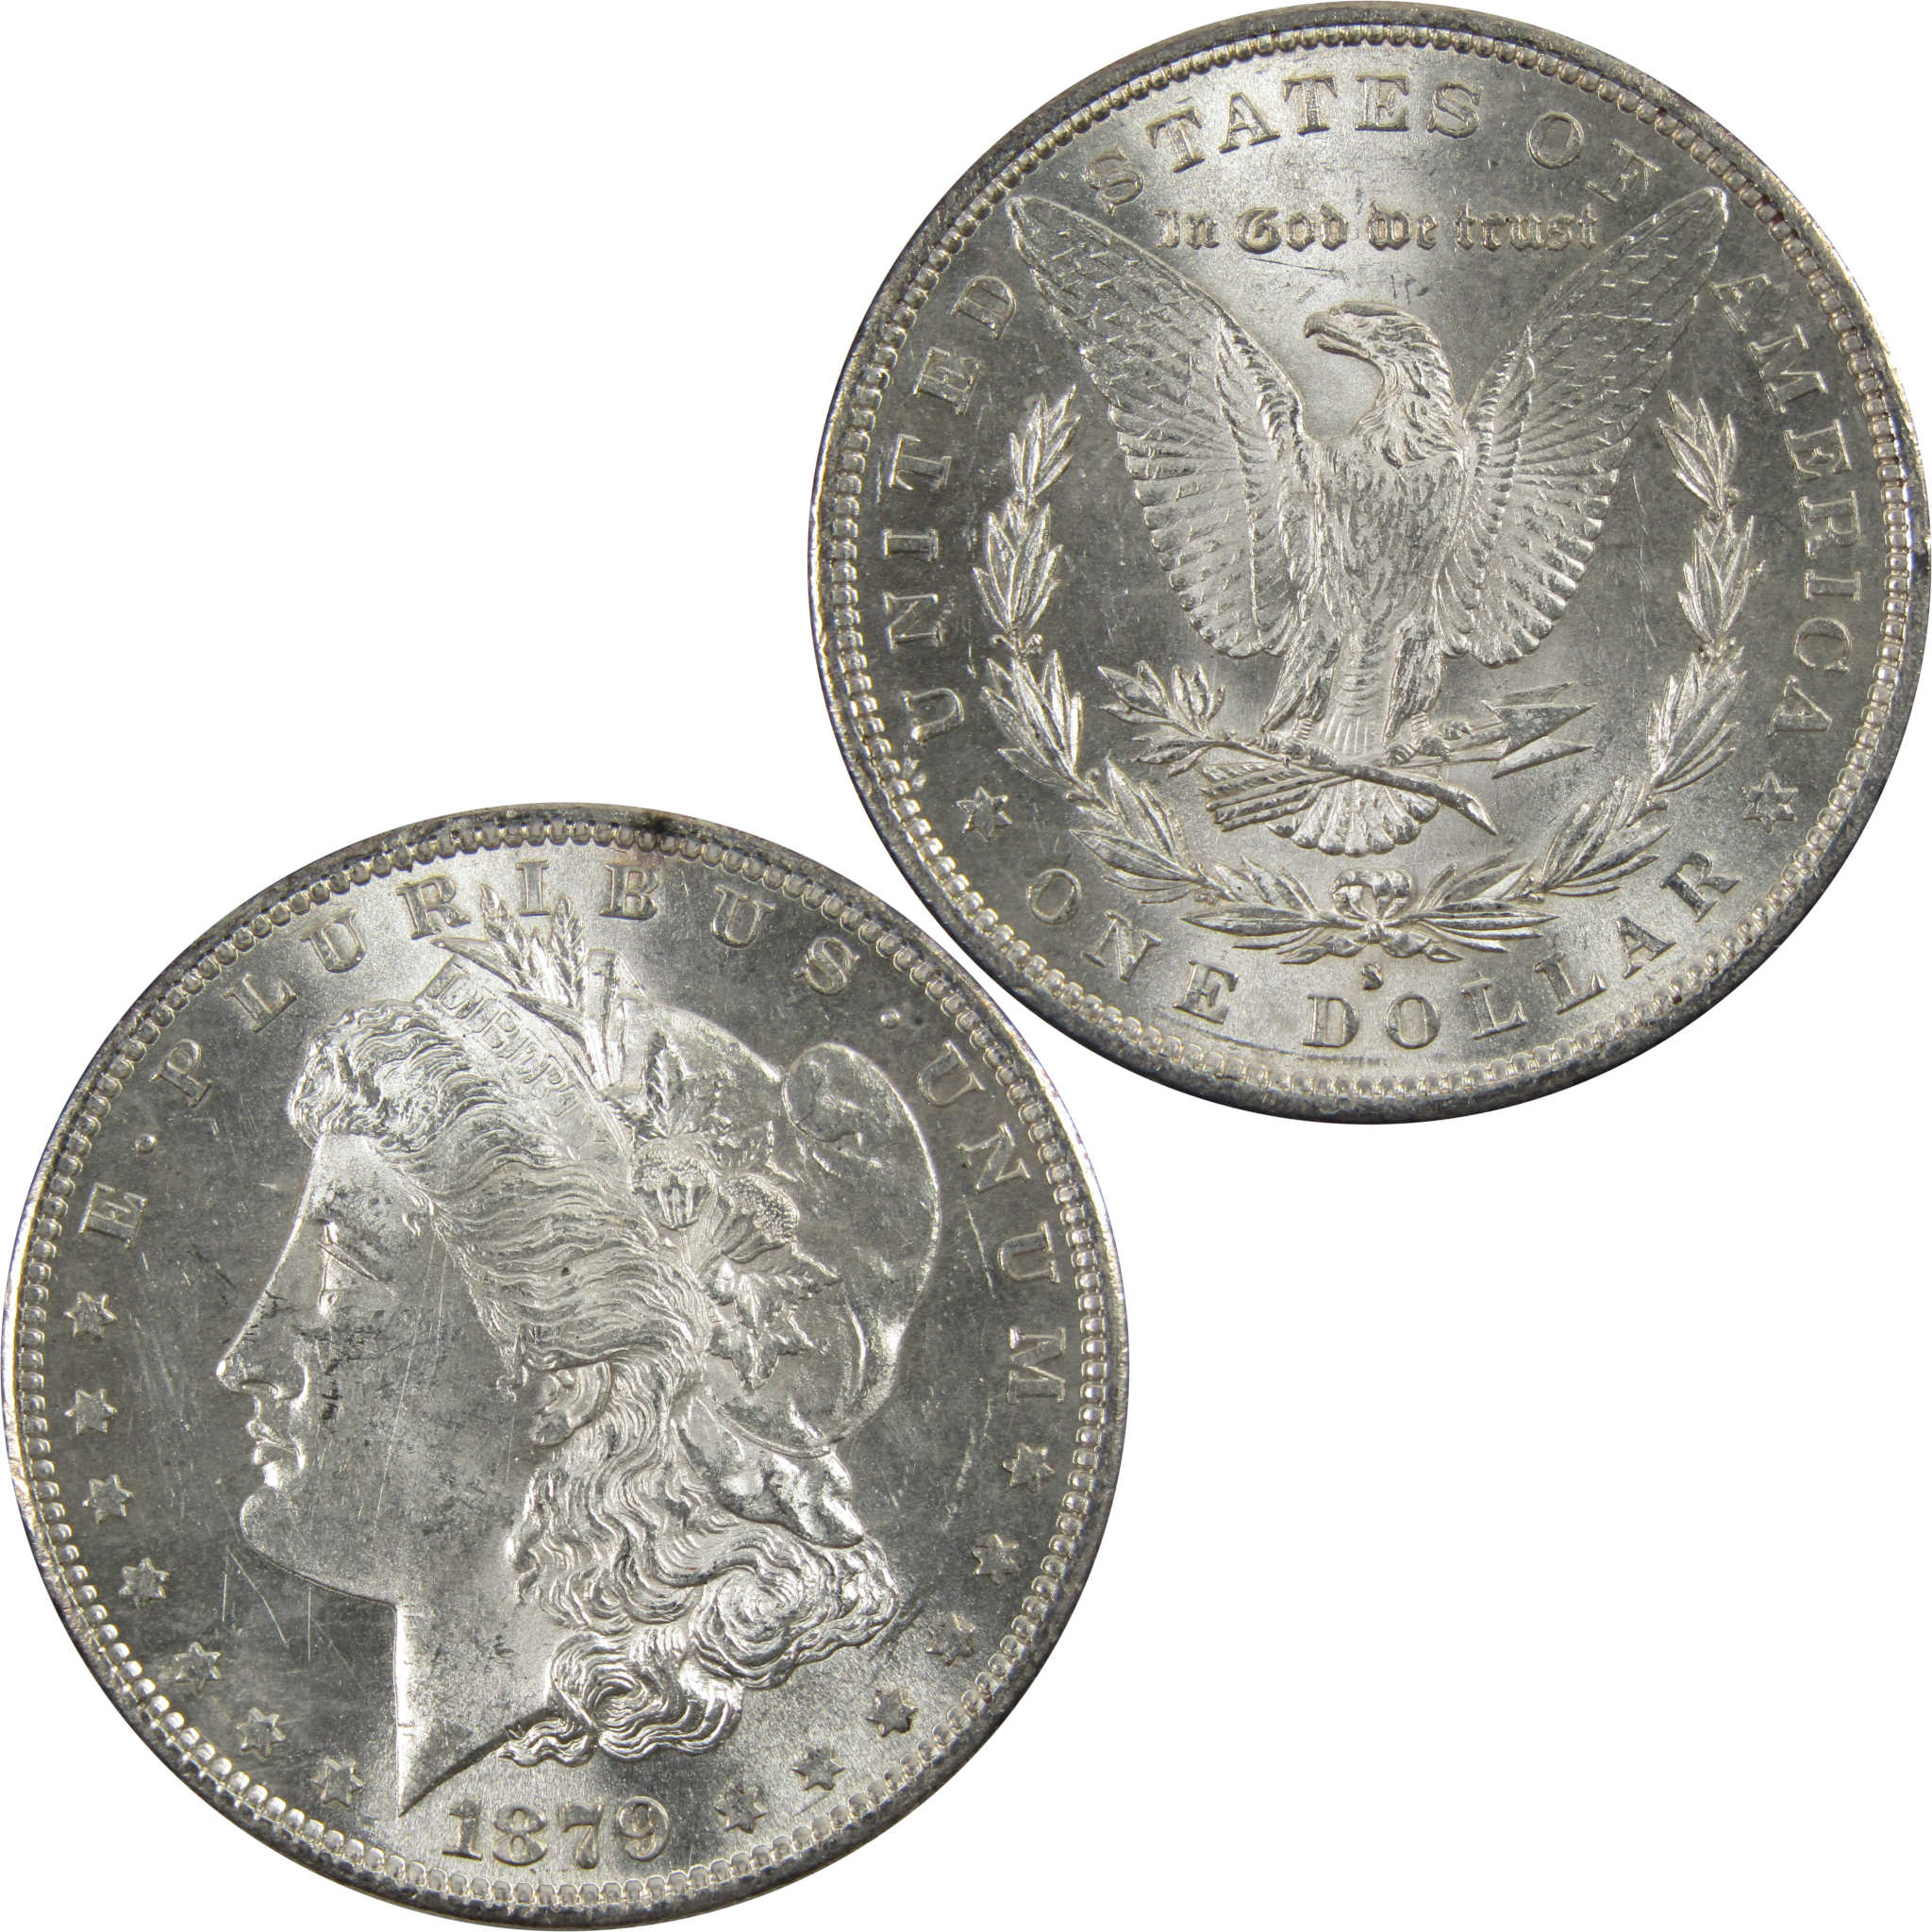 1879 S Morgan Dollar BU Uncirculated 90% Silver $1 Coin SKU:I5180 - Morgan coin - Morgan silver dollar - Morgan silver dollar for sale - Profile Coins &amp; Collectibles